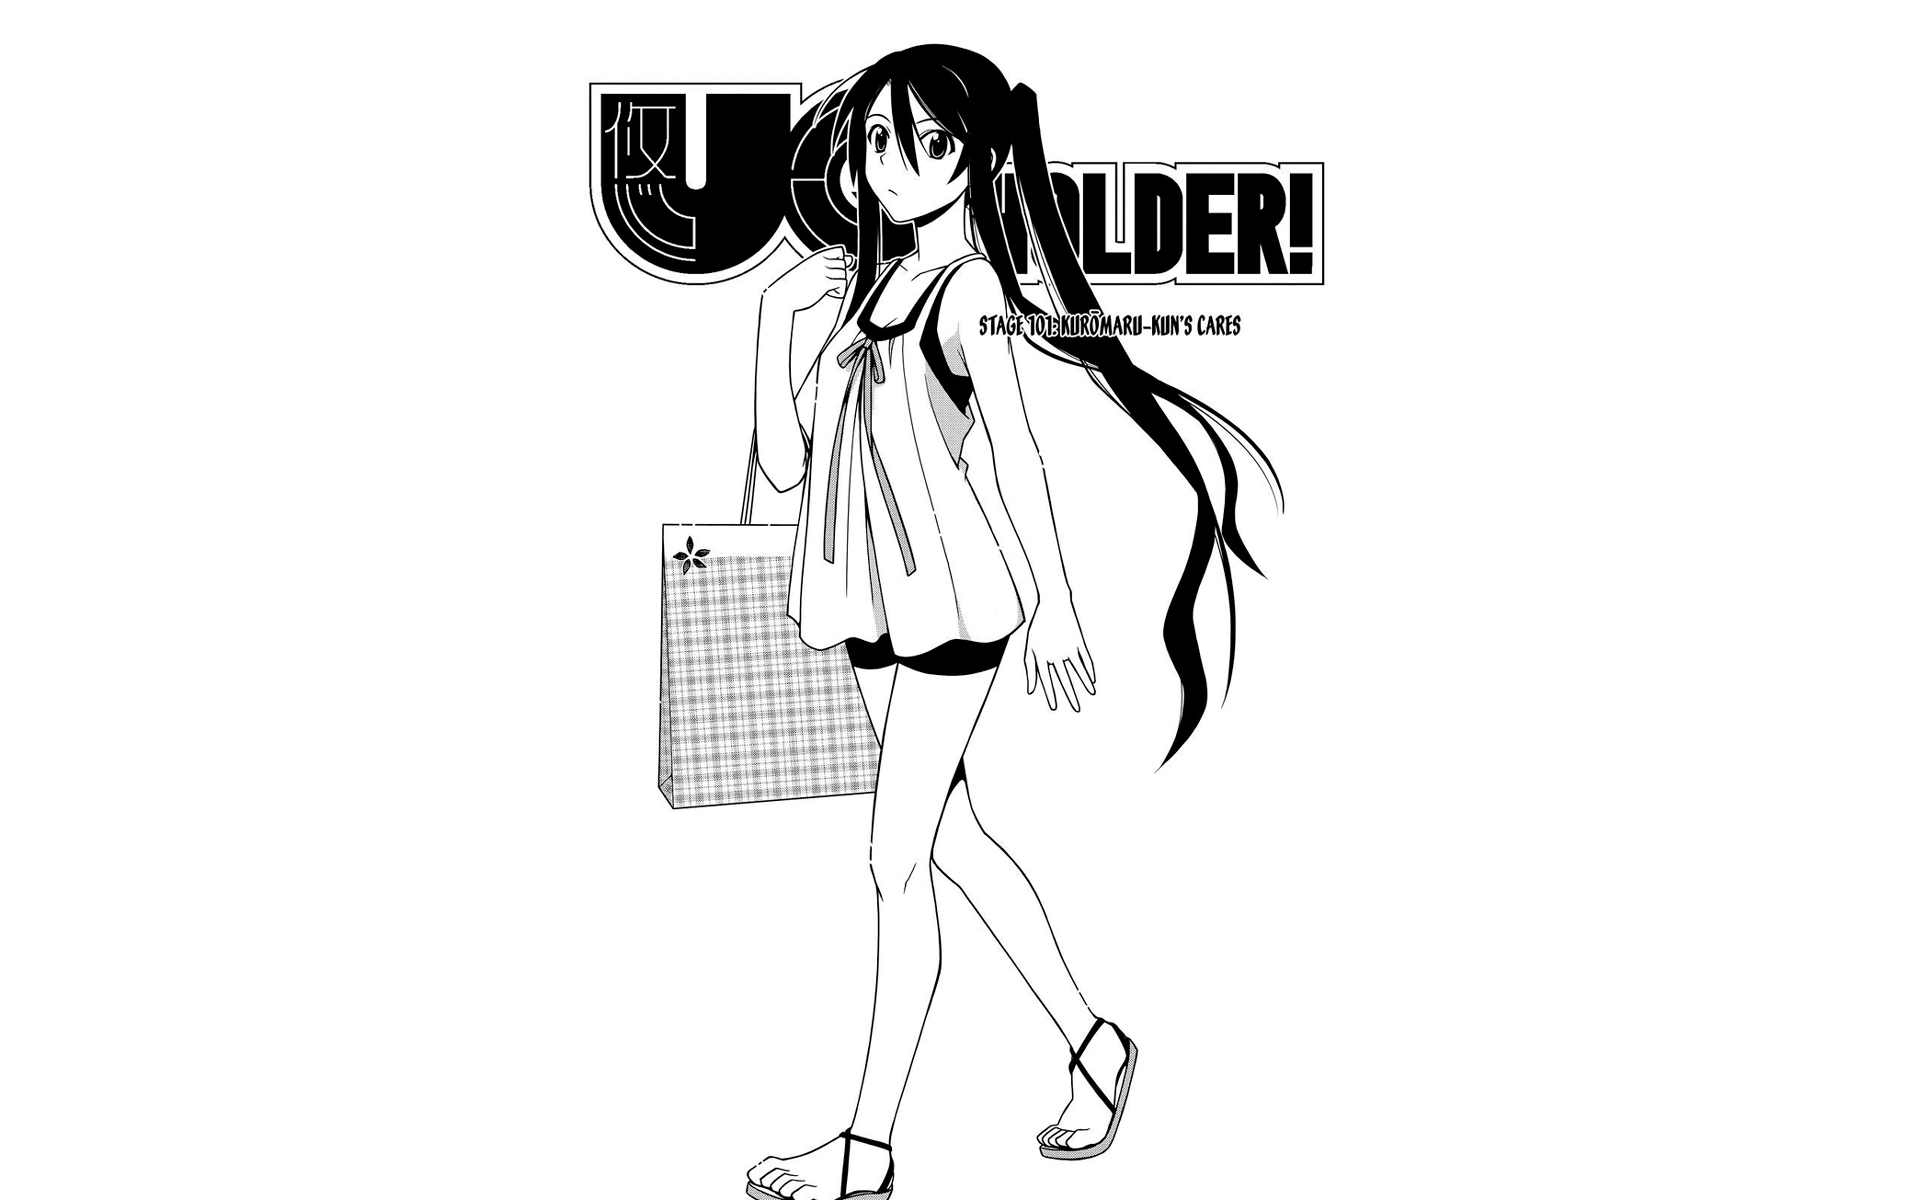 Anime UQ Holder 1920x1200